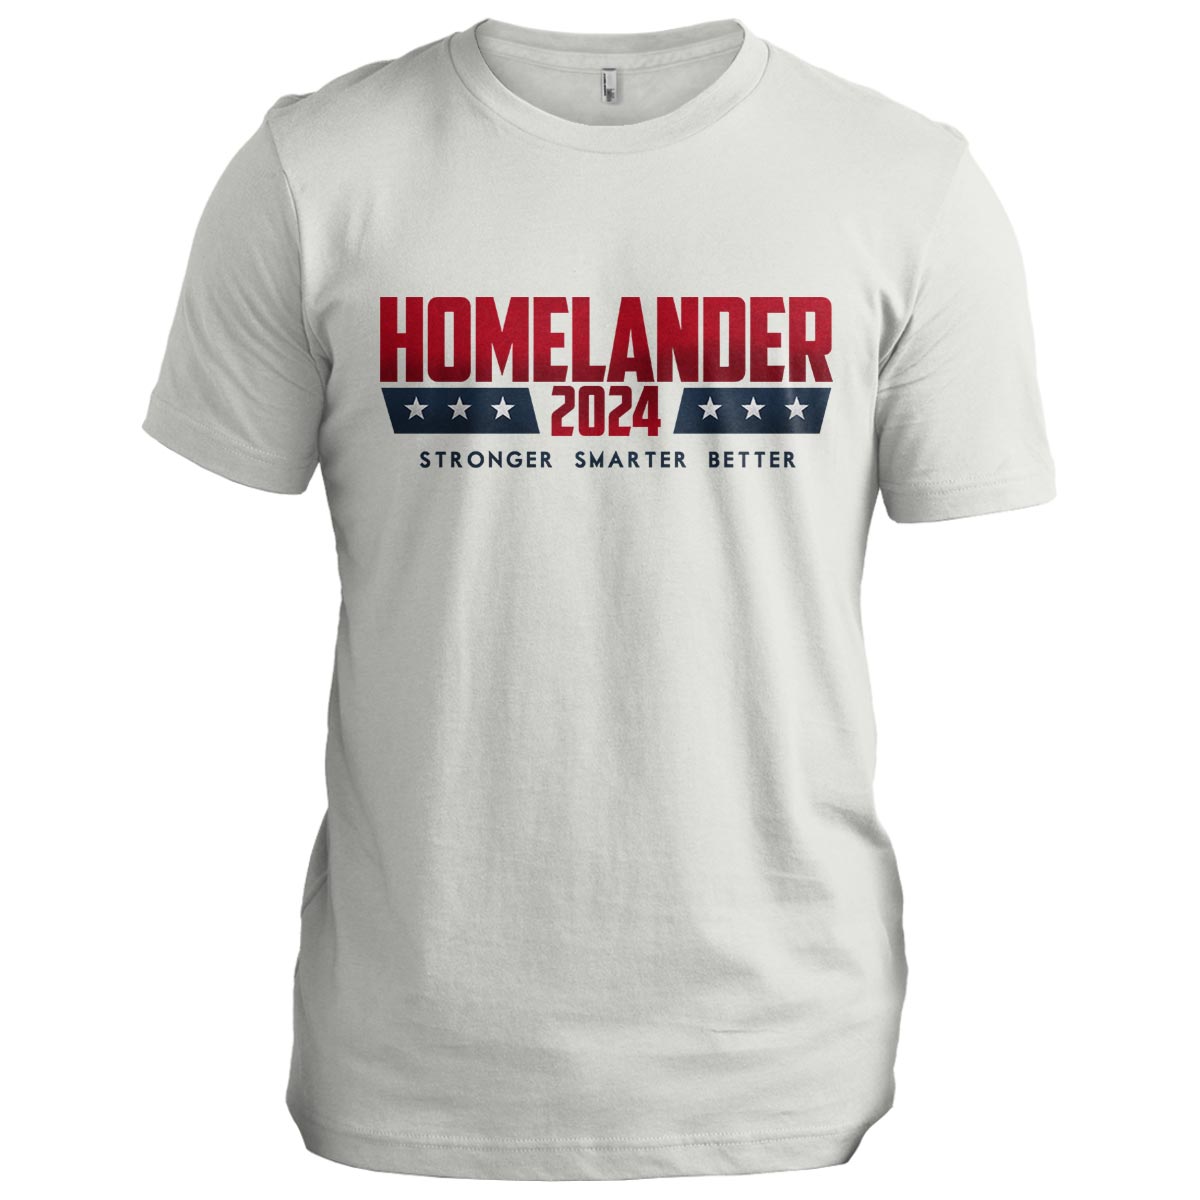 Homelander 2024